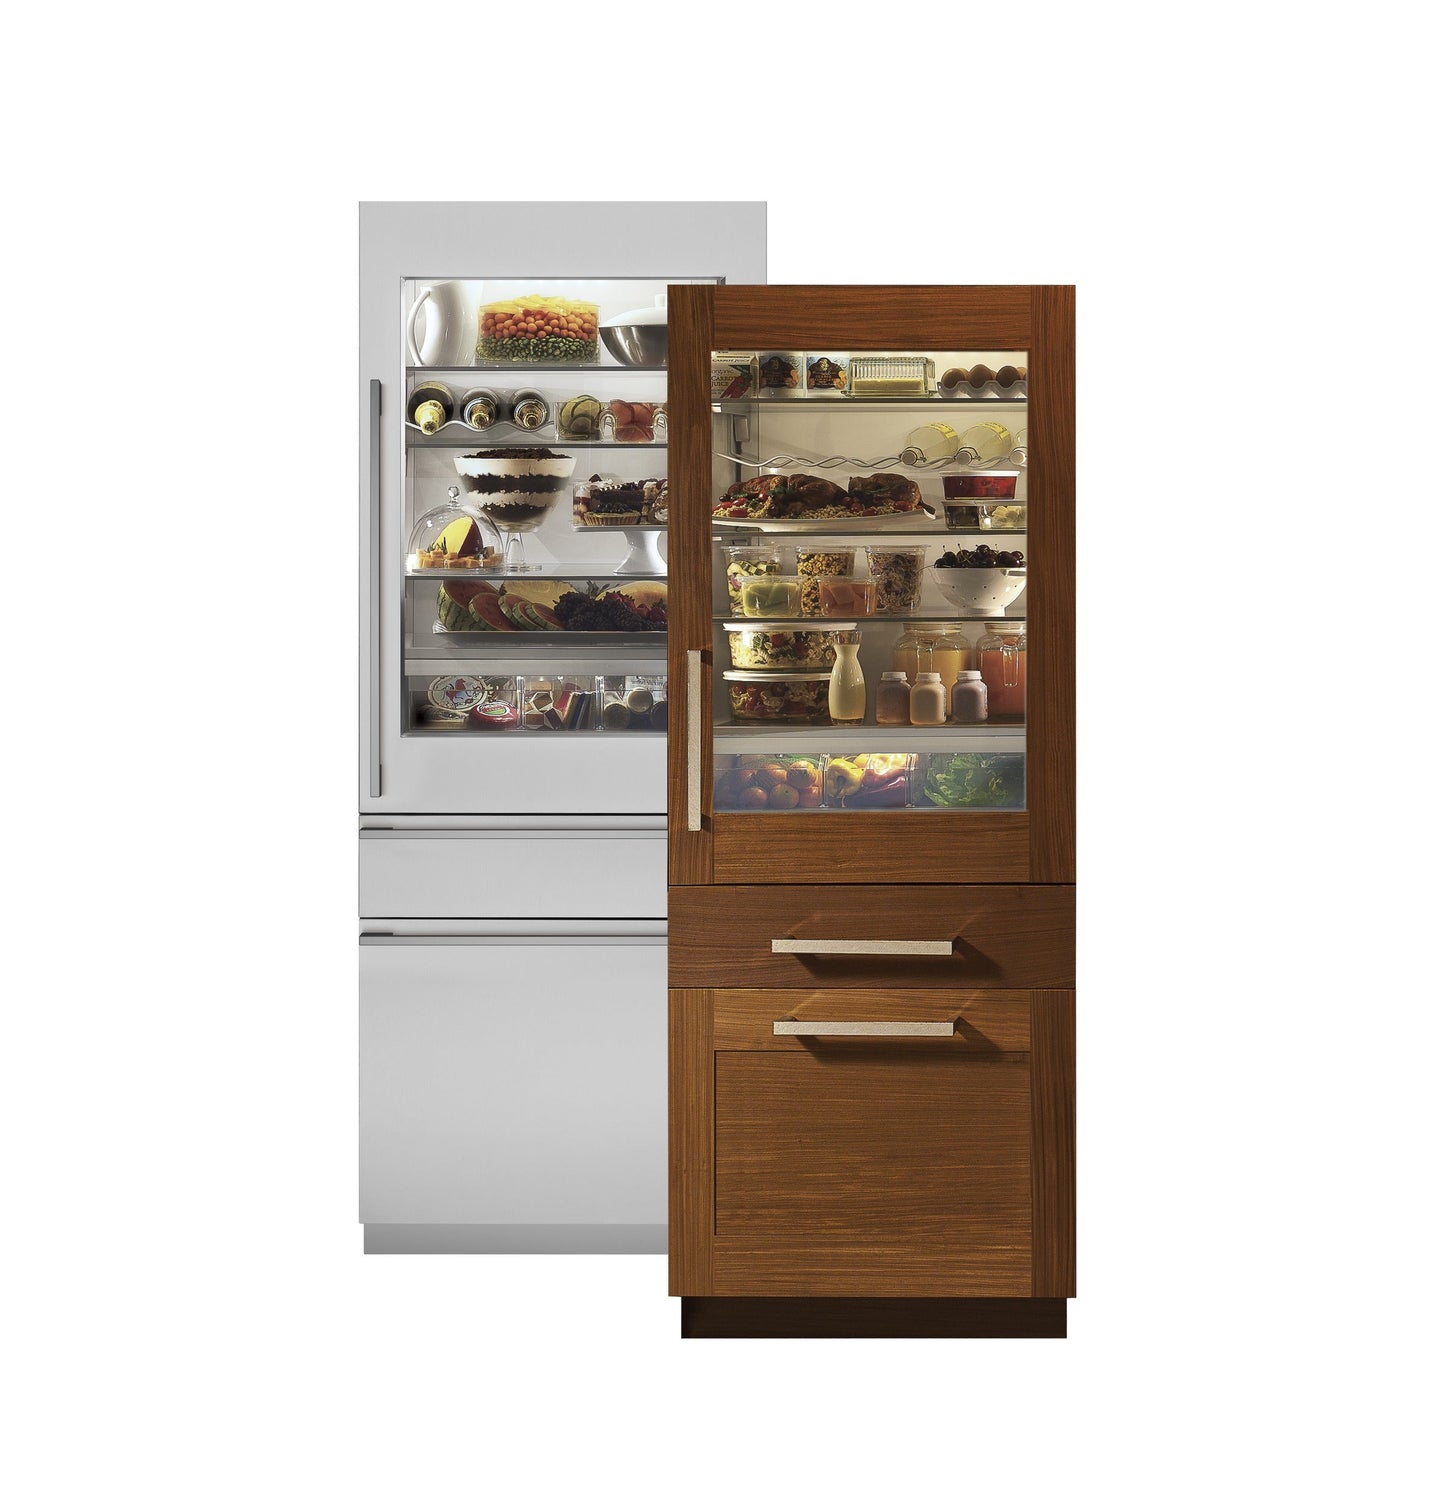 Monogram 30" Fully Integrated Customizable Glass Door Refrigerator - ZIK30GNNII